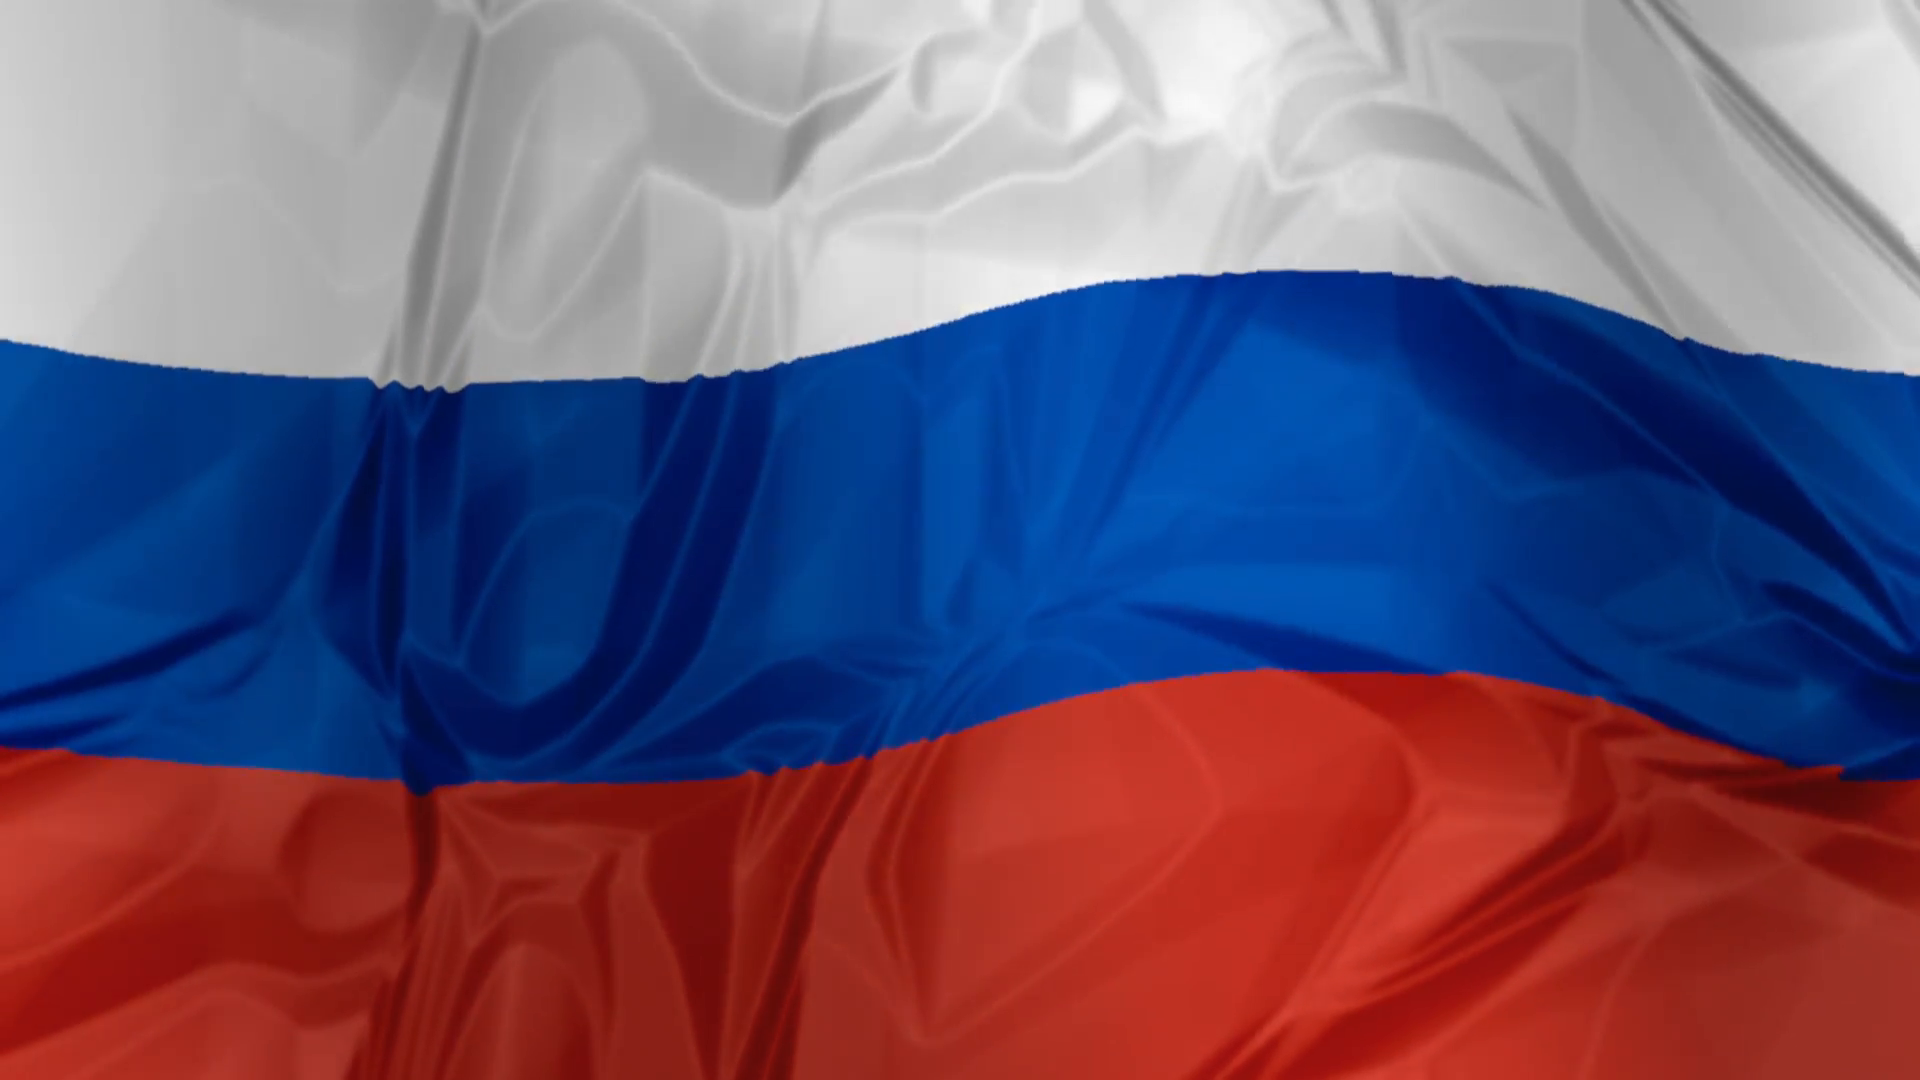 صادرات قراضه روسیه کاهش یافت